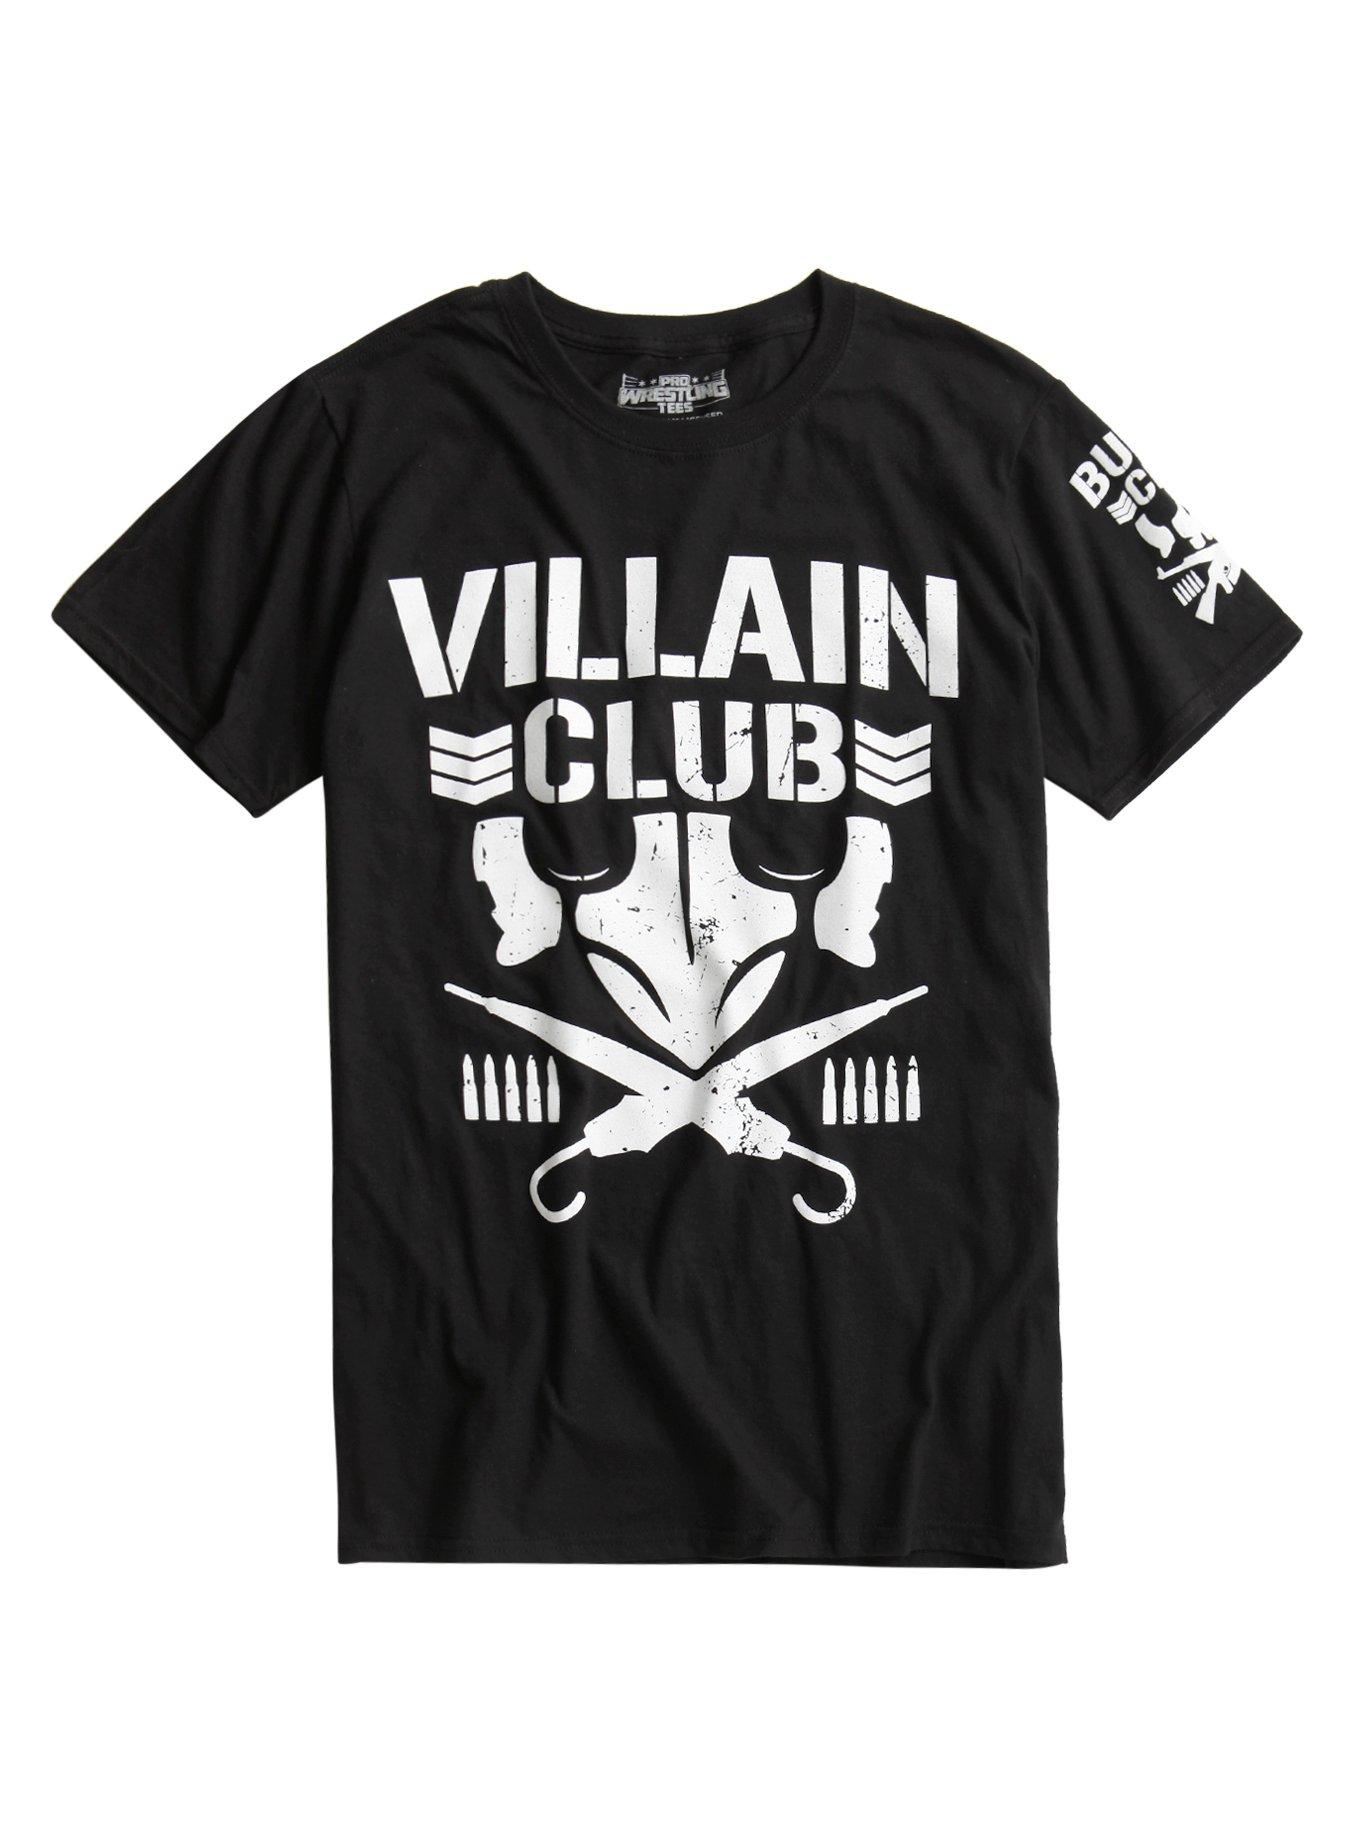 New Japan Pro-Wrestling Bullet Club Villain Club Logo T-Shirt, BLACK, hi-res